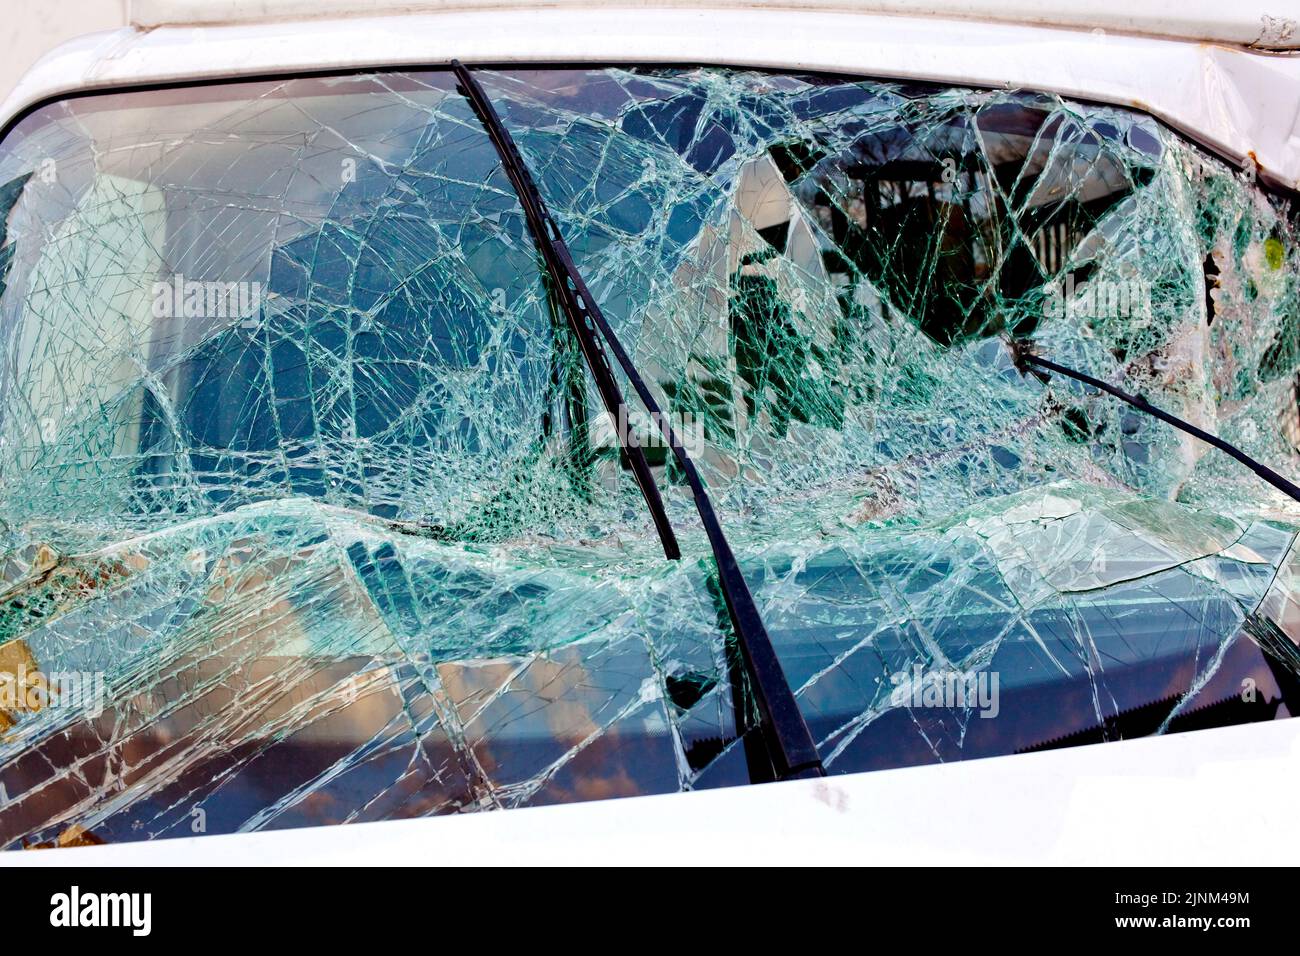 cristal roto, parabrisas, accidente de coche, parabrisas, accidente, accidentes, accidentes automovilísticos Foto de stock